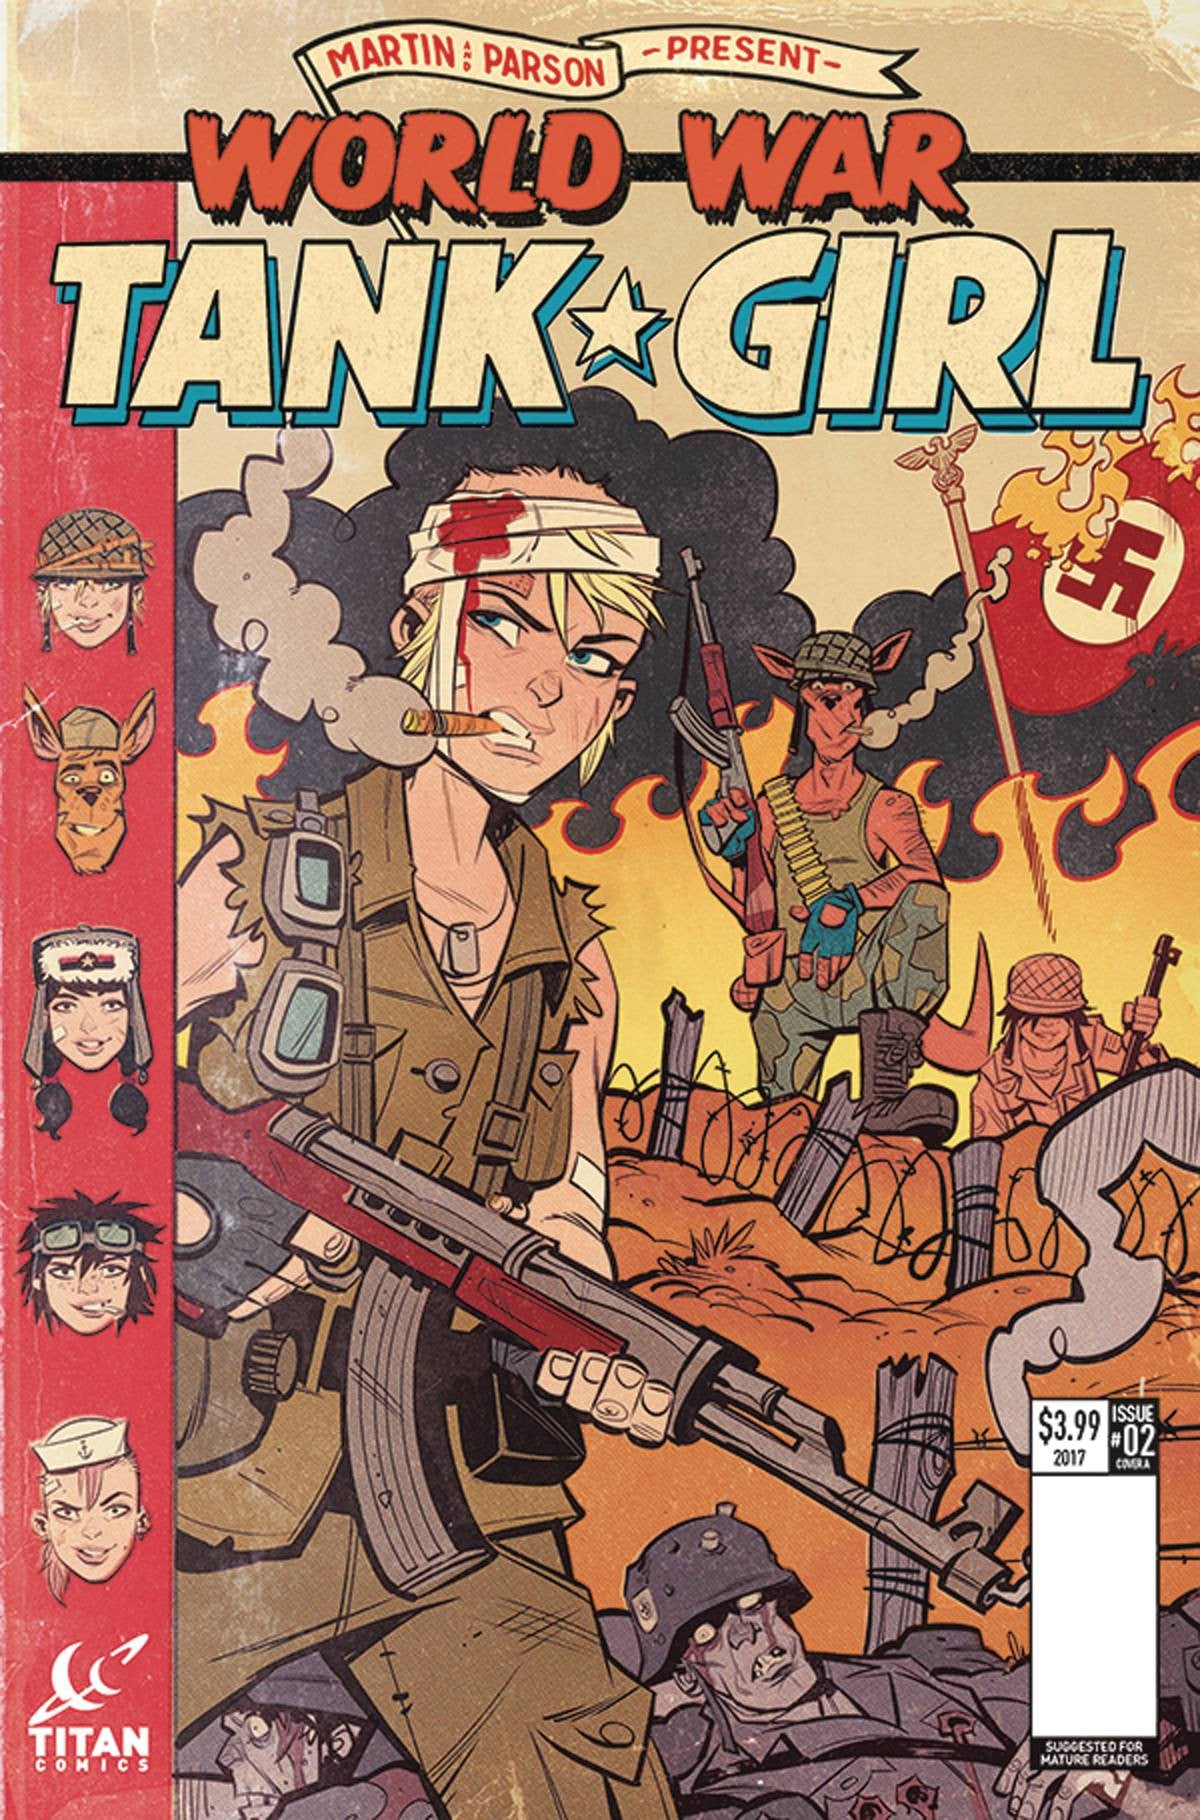 TANK GIRL WORLD WAR TANK GIRL#2 (OF 4) CVR A PARSON COVER